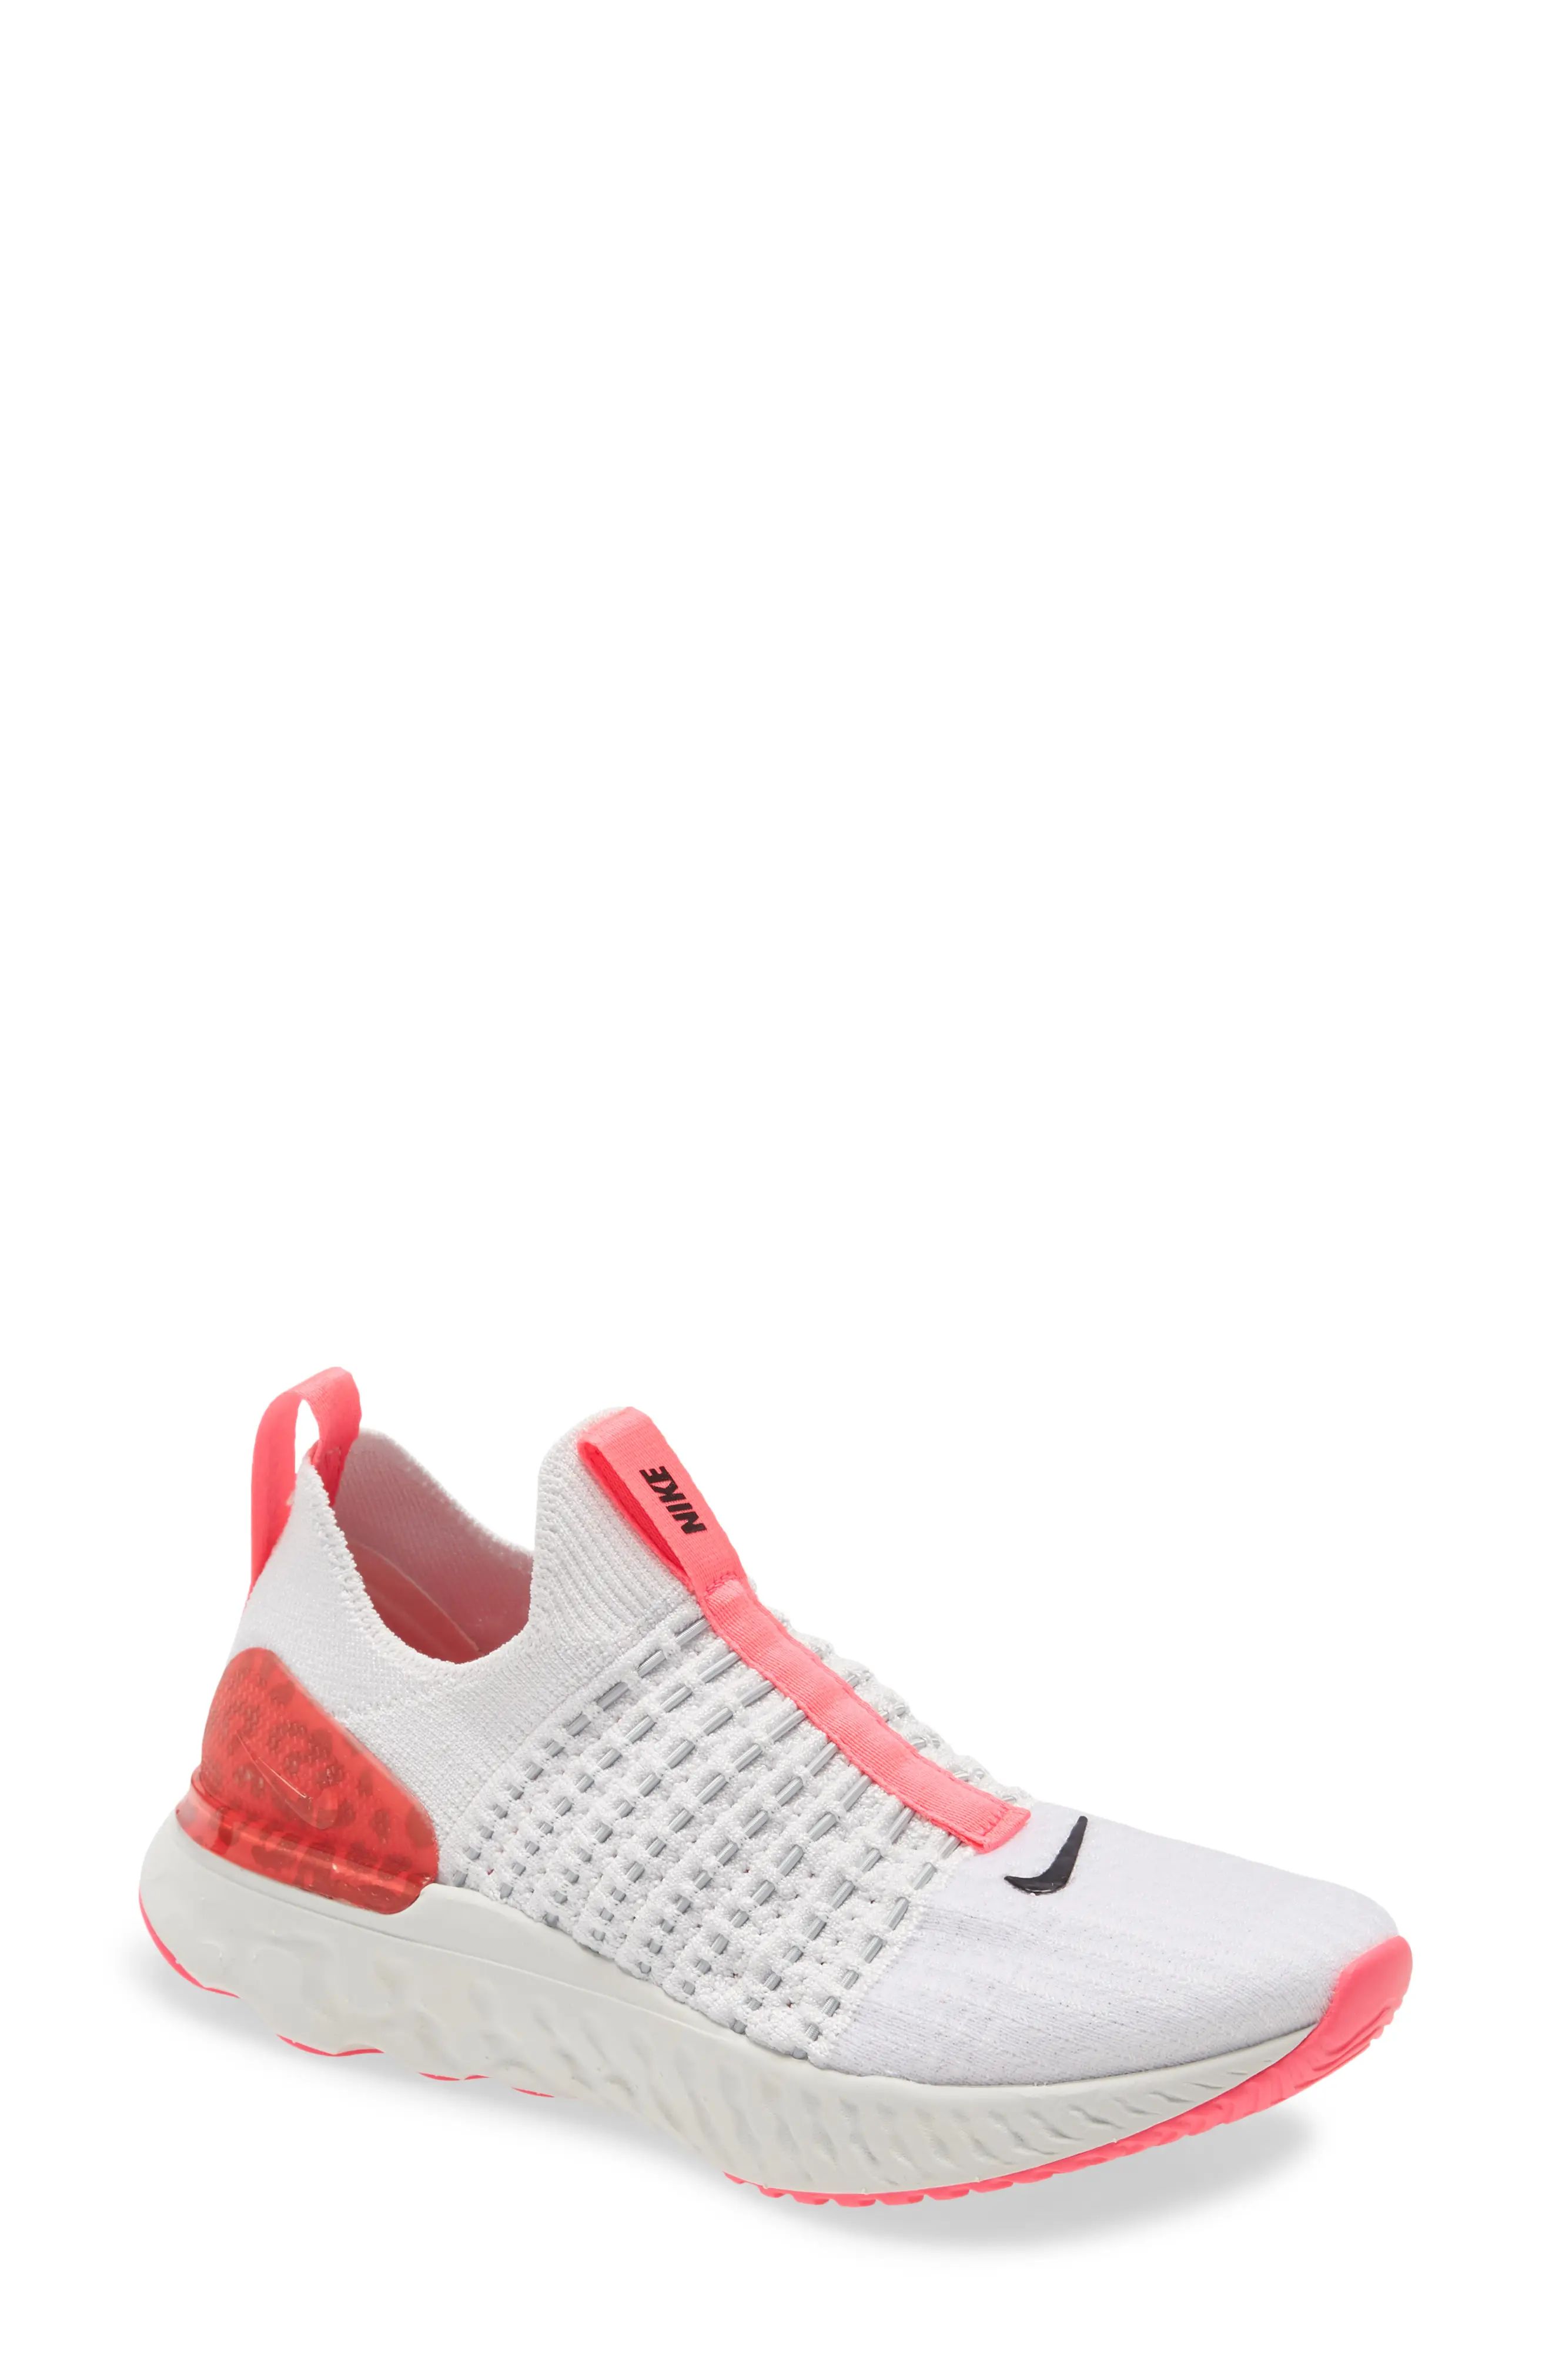 Nike React Phantom Run Flyknit 2 Running Shoe, Size 11 in Platinum Tint/Black/Pink at Nordstrom | Nordstrom